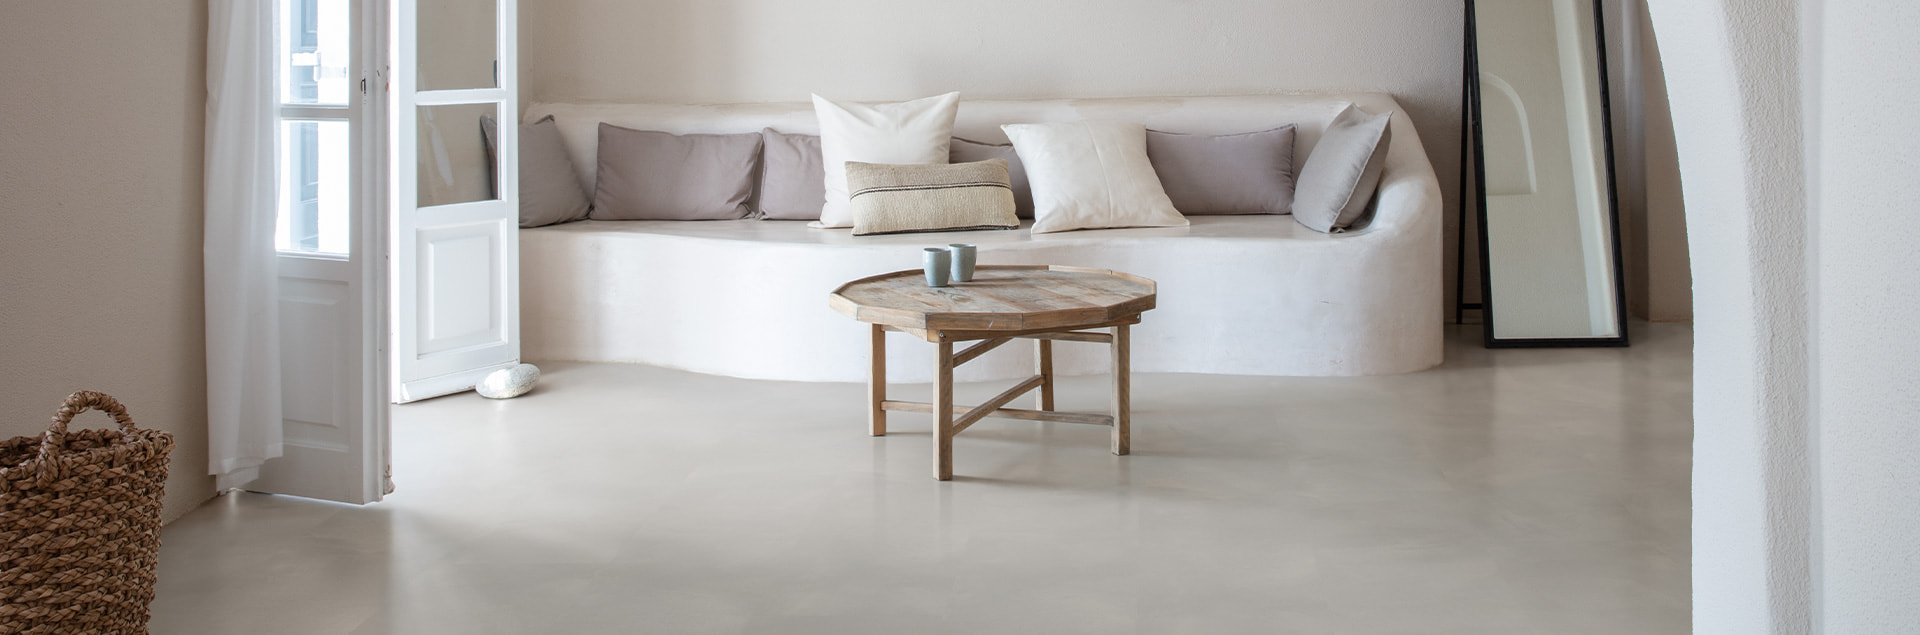 grey vinyl flooring in living room by Quick-Step